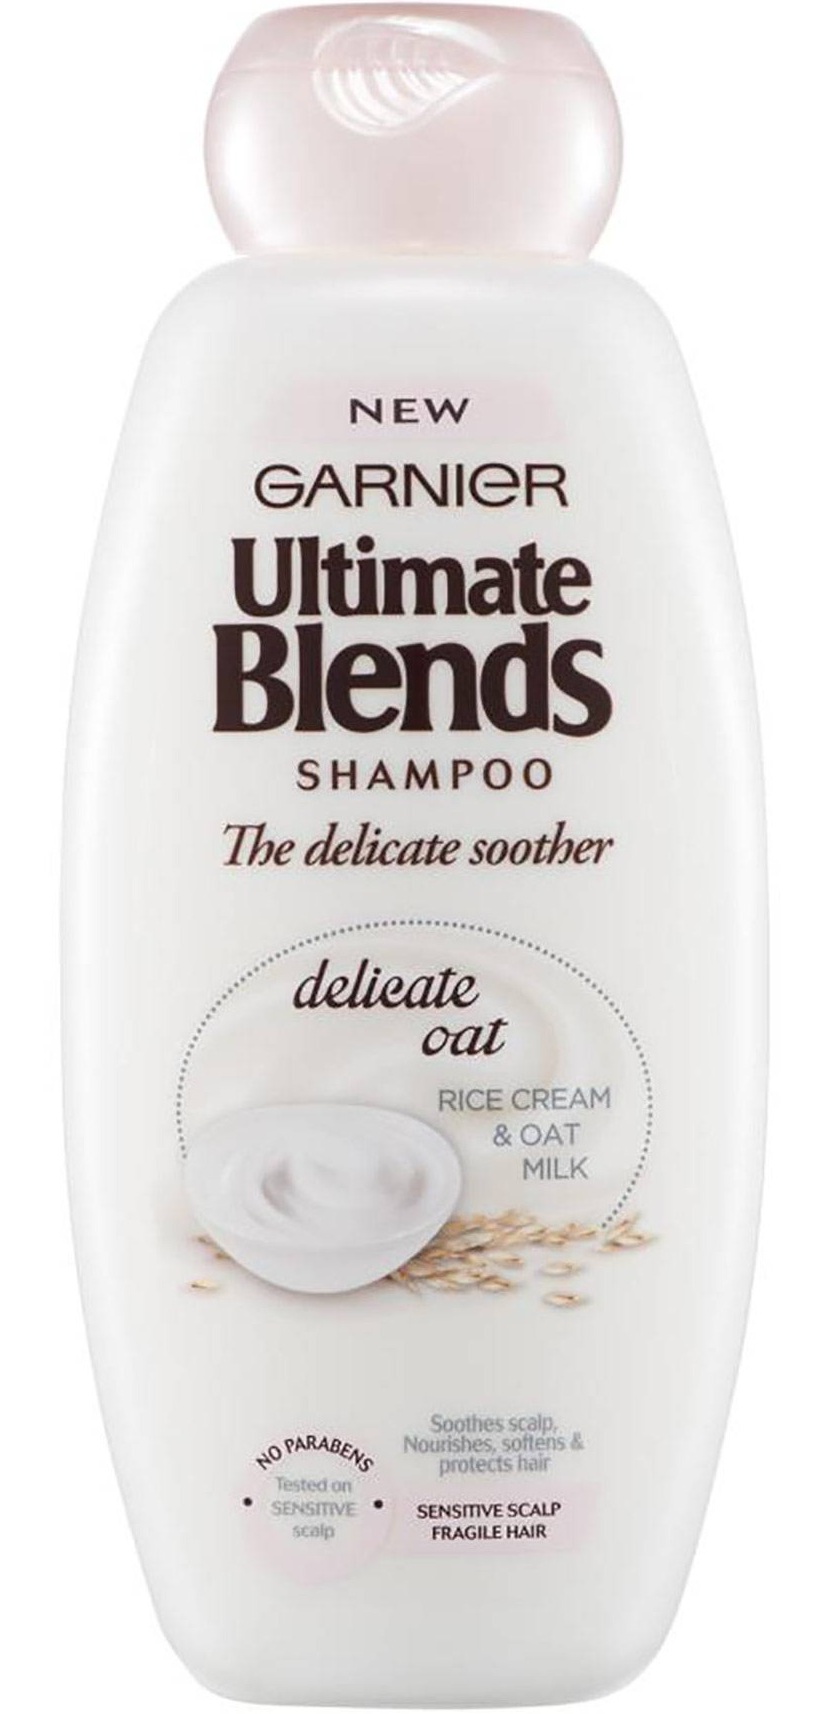 Garnier Ultimate Blends Shampoo - Delicate Oat